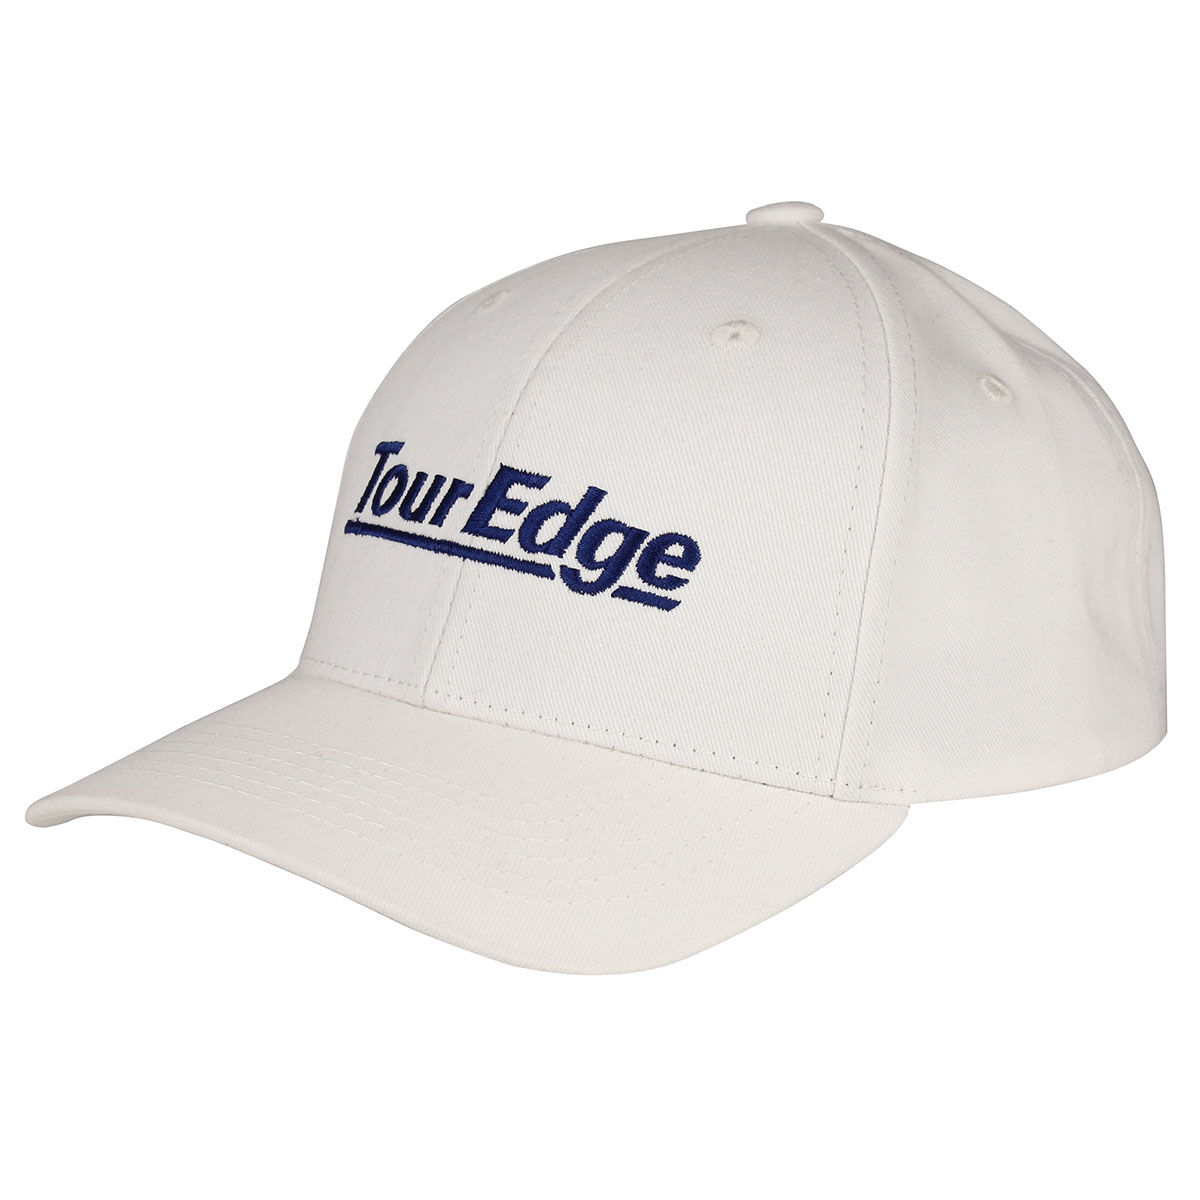 Tour Edge Men's White and Black Embroidered Core Logo Golf Cap | American Golf, One Size von Tour Edge